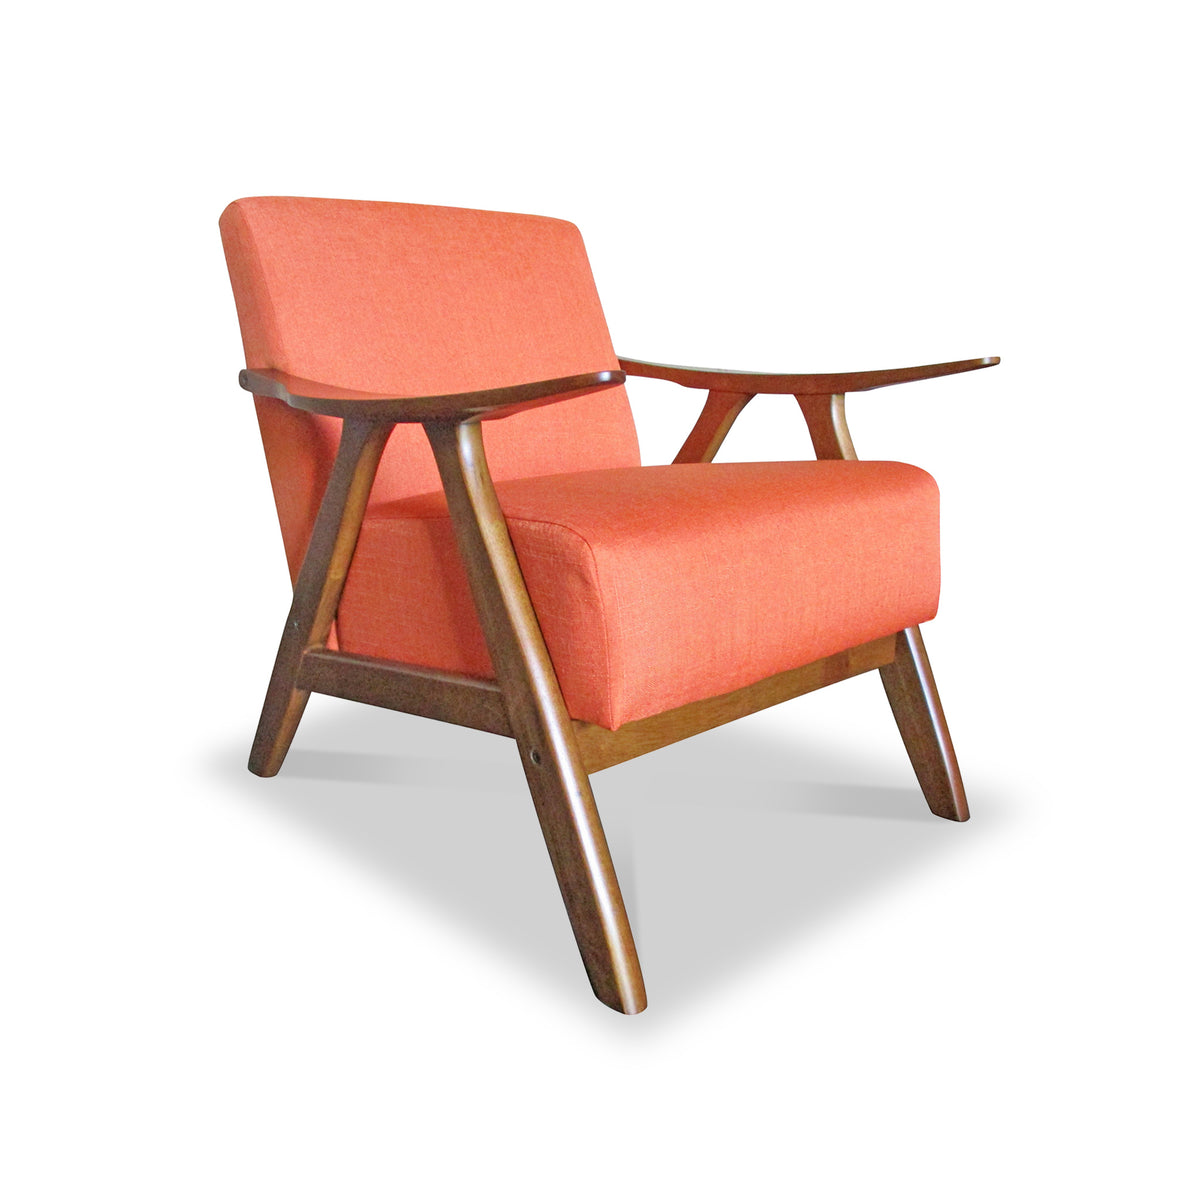 Hollis Burnt Orange Chair from Roseland Furniture